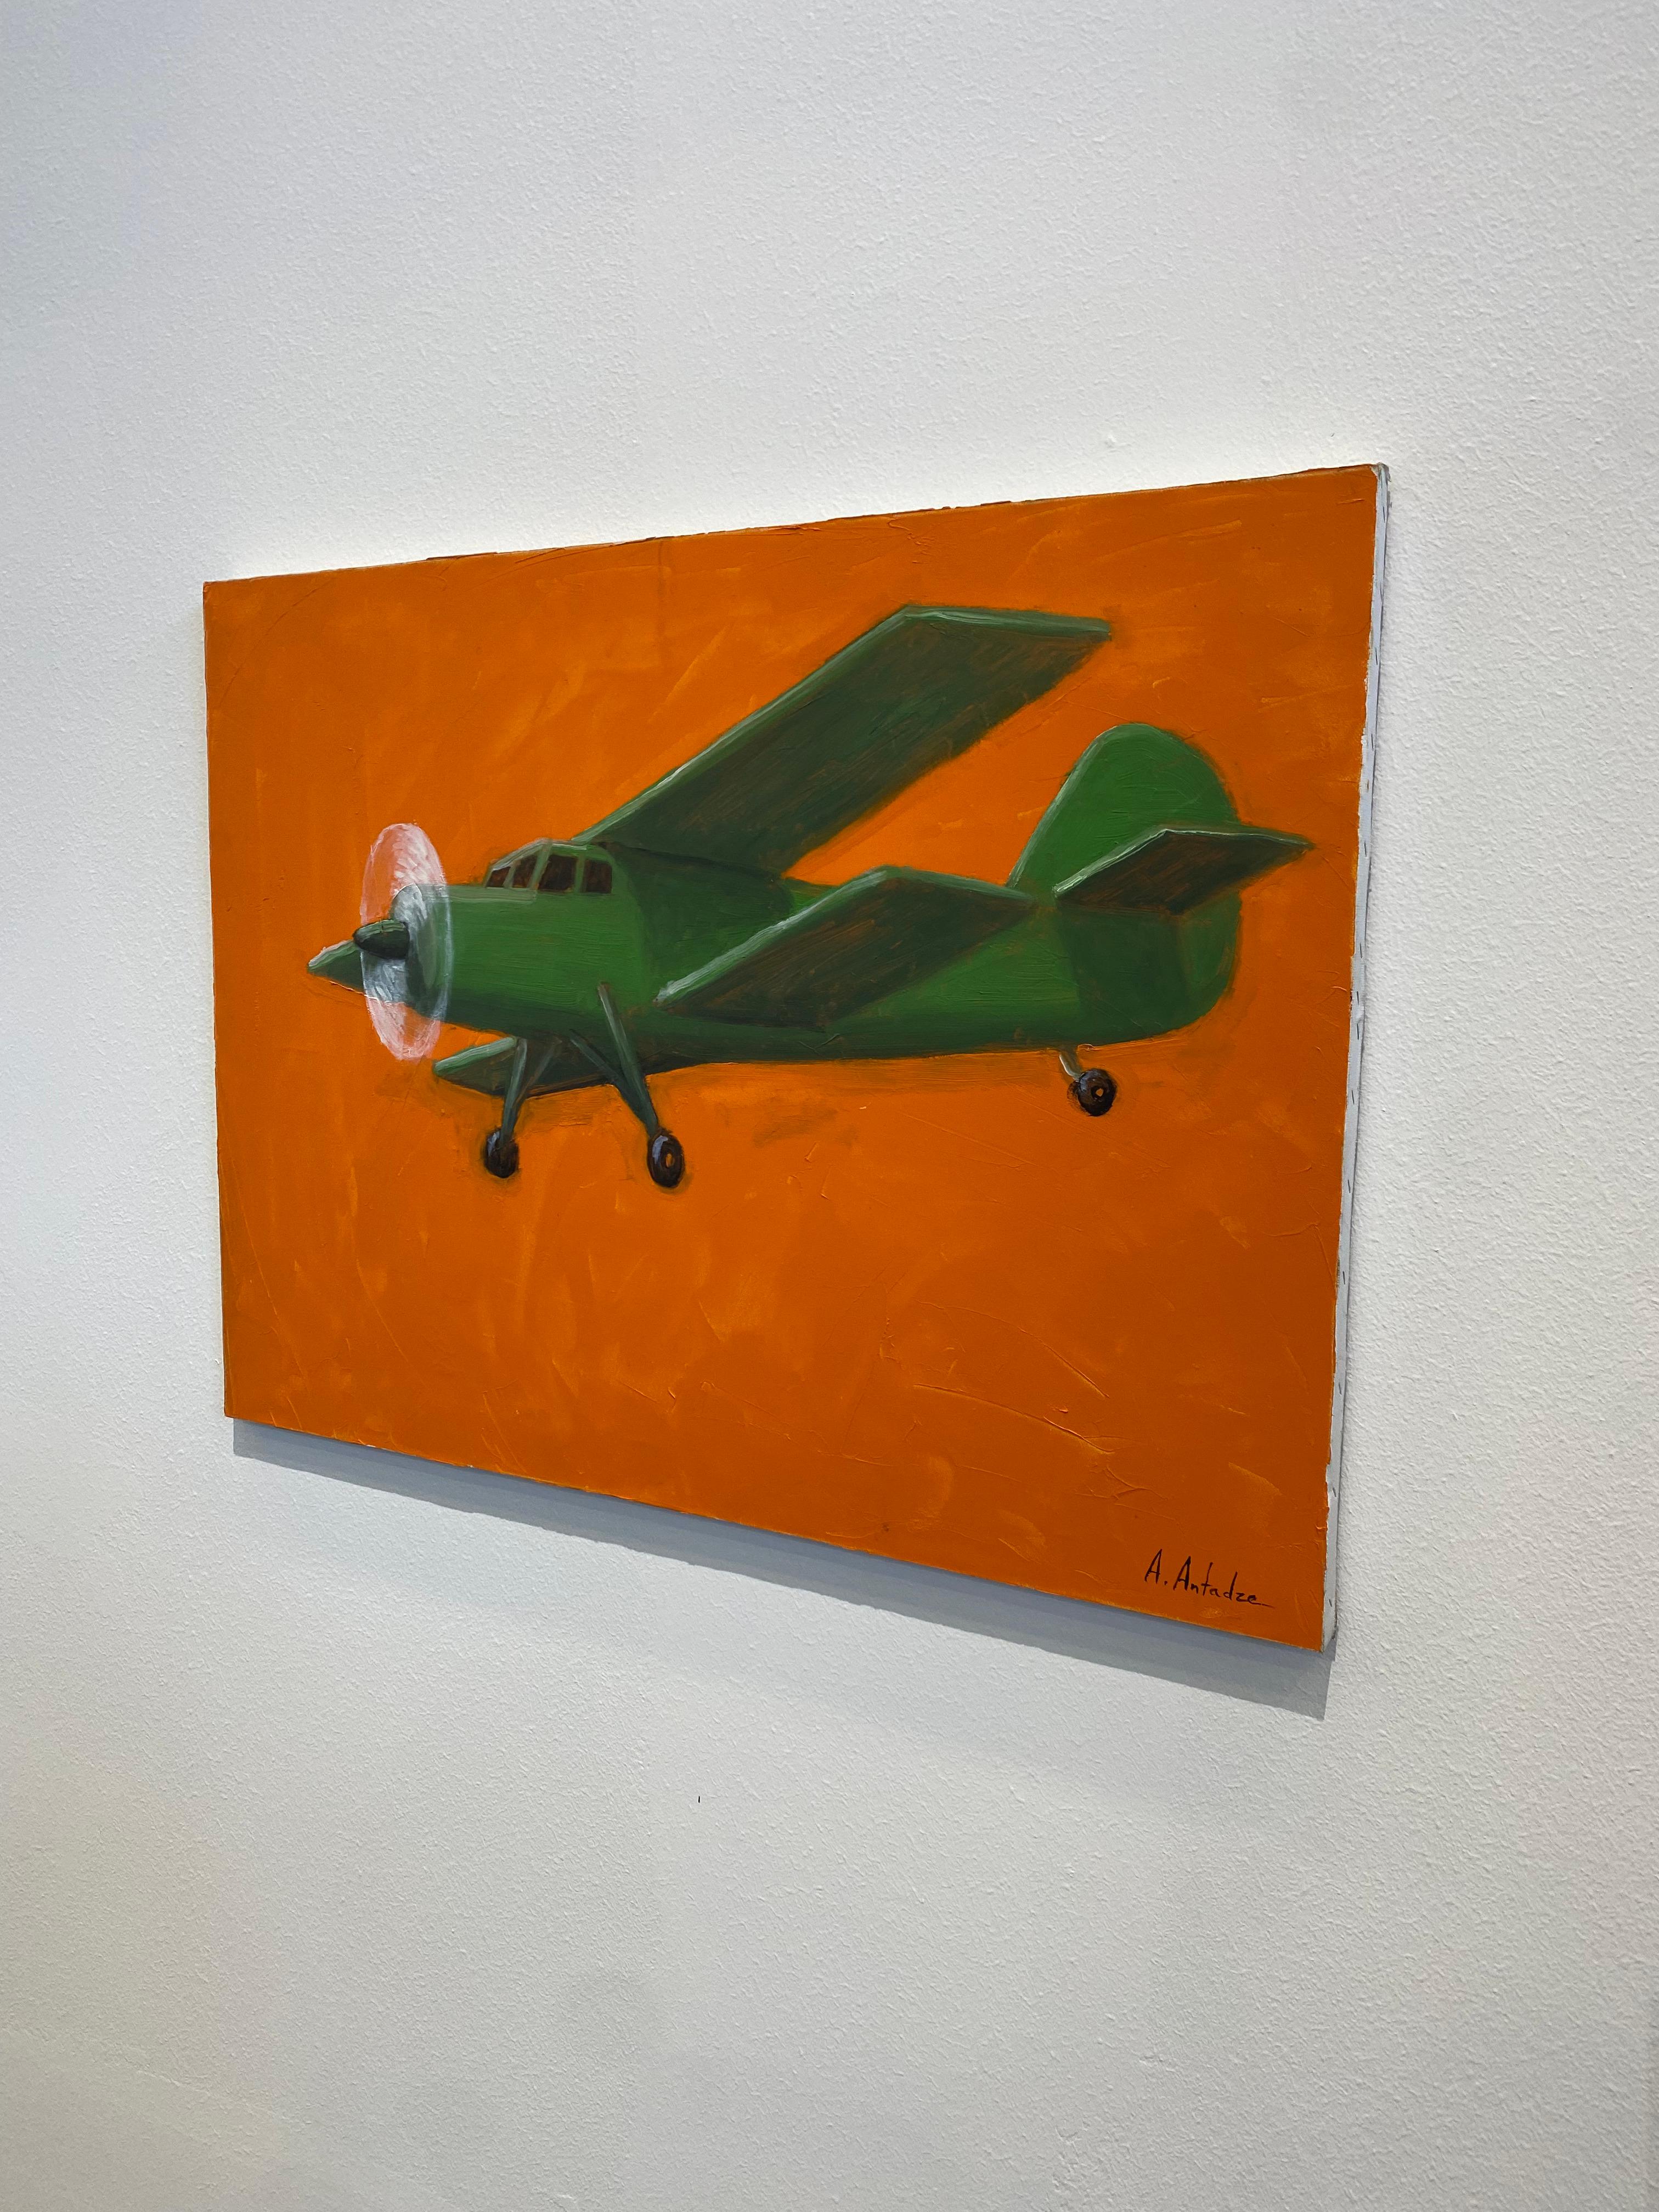 Georgian Contemporary Art by Alexander Sandro Antadze - Green Plane For Sale 9